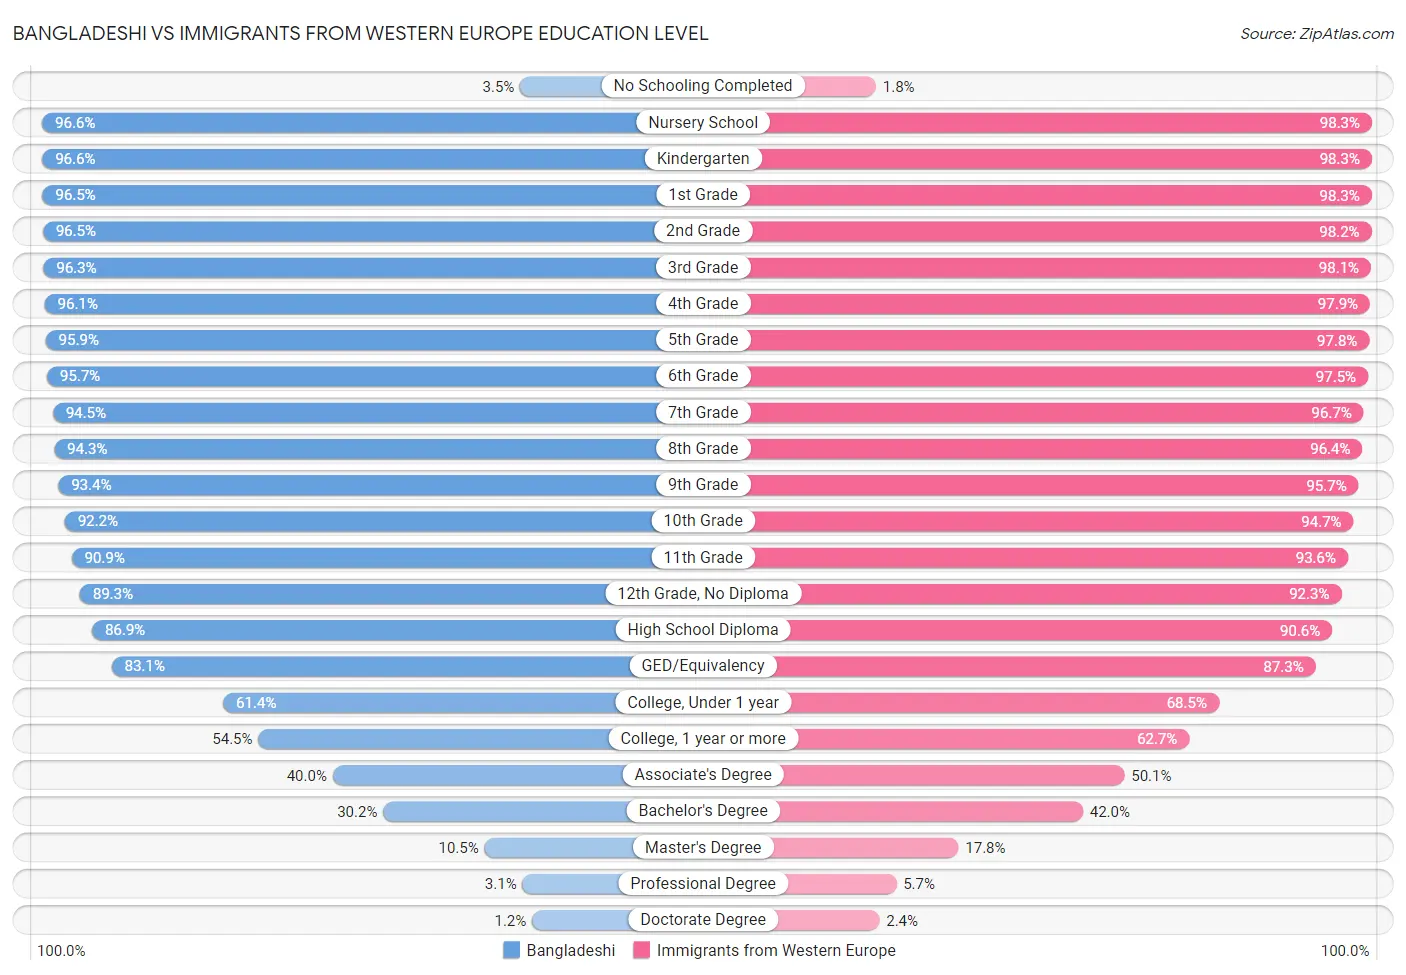 Bangladeshi vs Immigrants from Western Europe Education Level